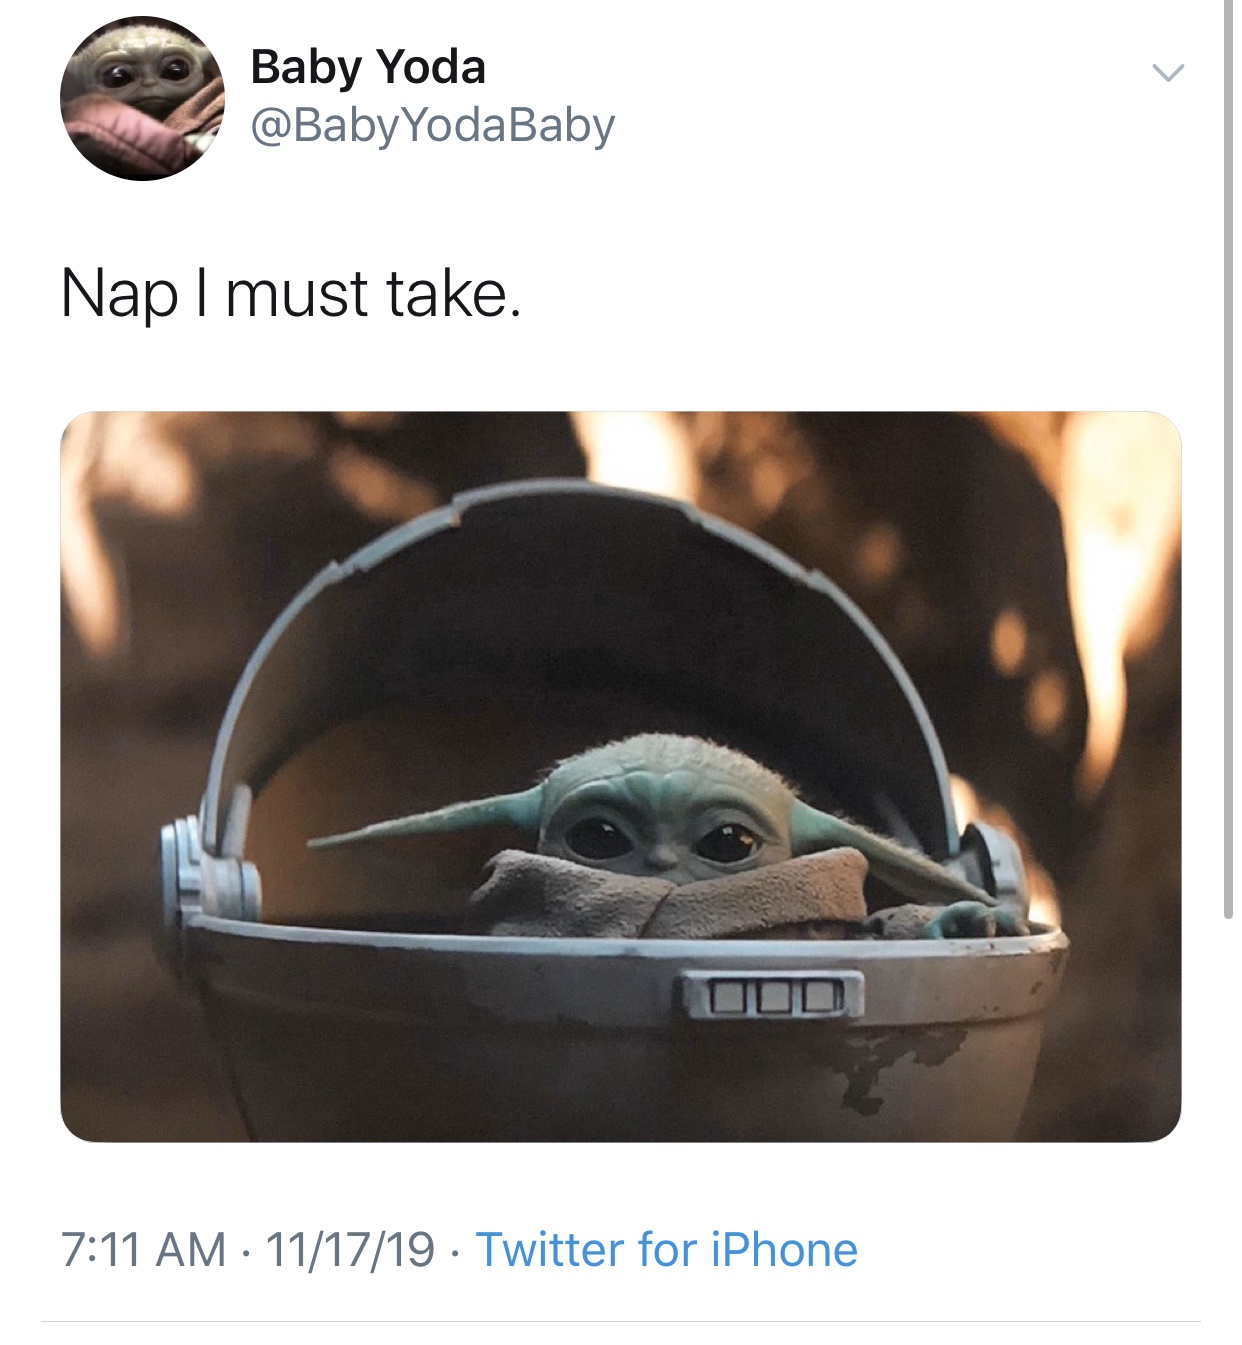 baby yoda meme - Baby Yoda NapI must take. 111719 Twitter for iPhone